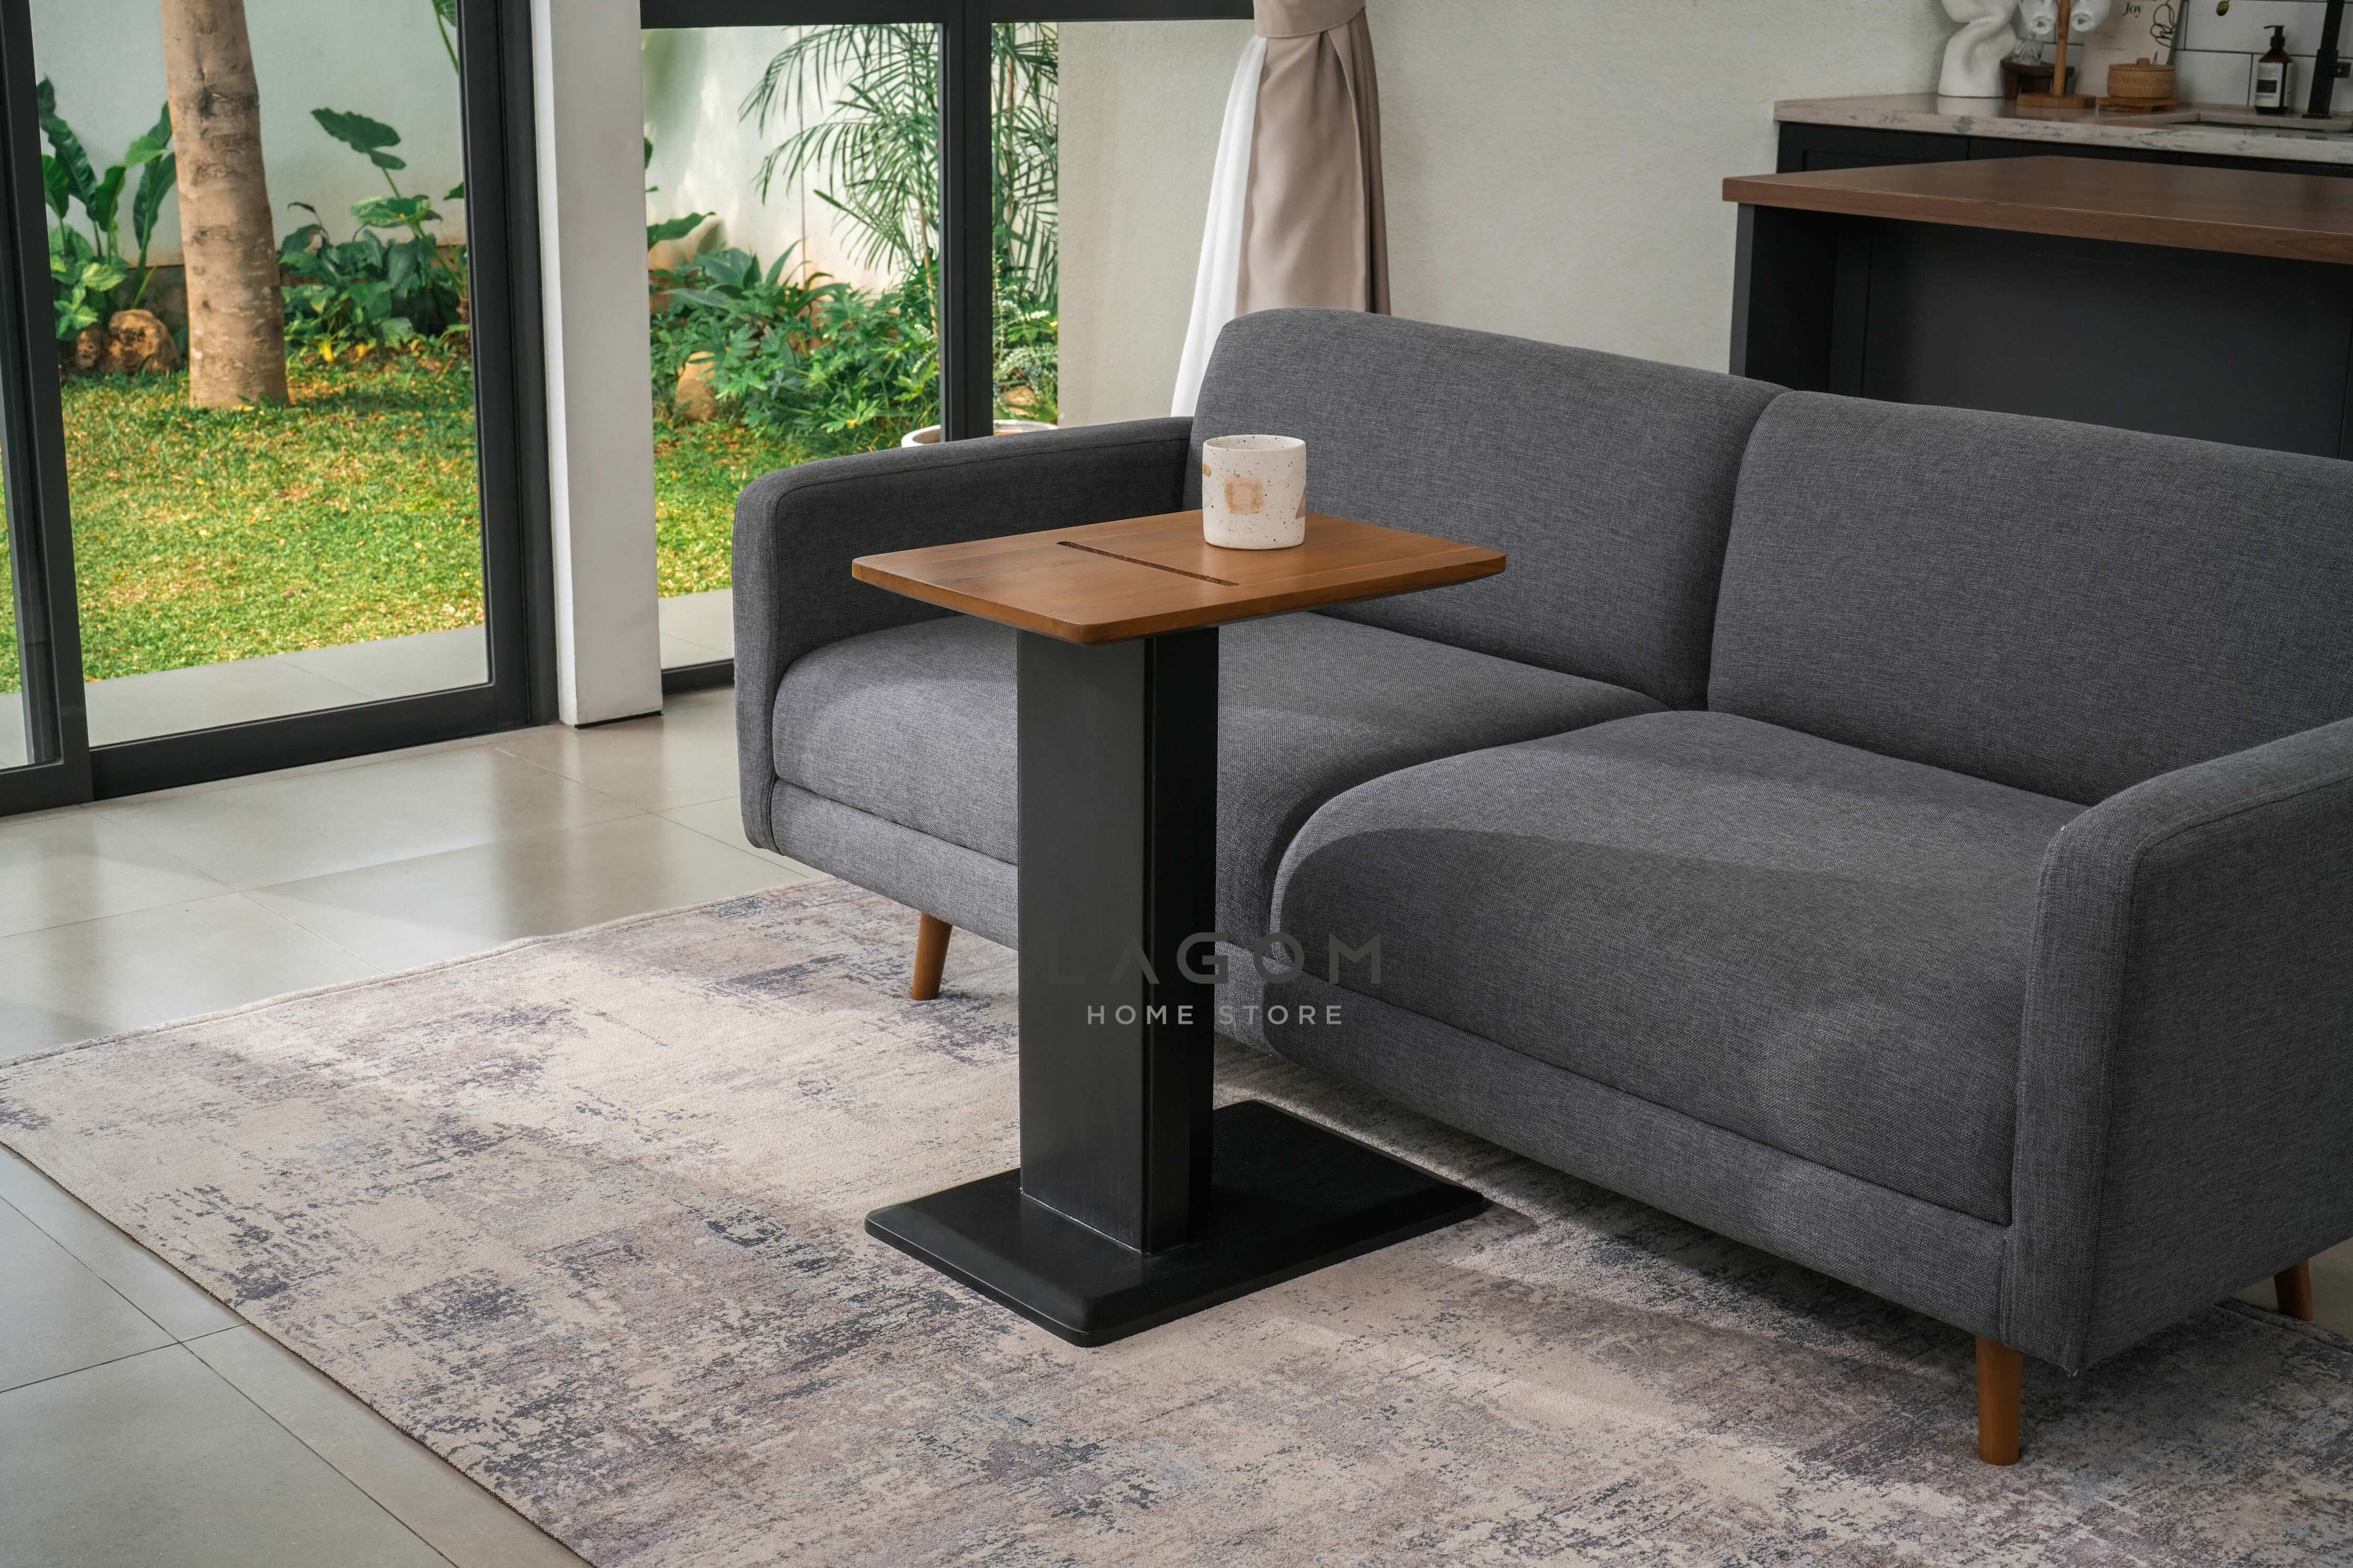 Sofa Kayu Jati Double Seater - Texture dan Color Customizable Sofa Lagom Home Store Jati Furnitur Teak Furniture Jakarta